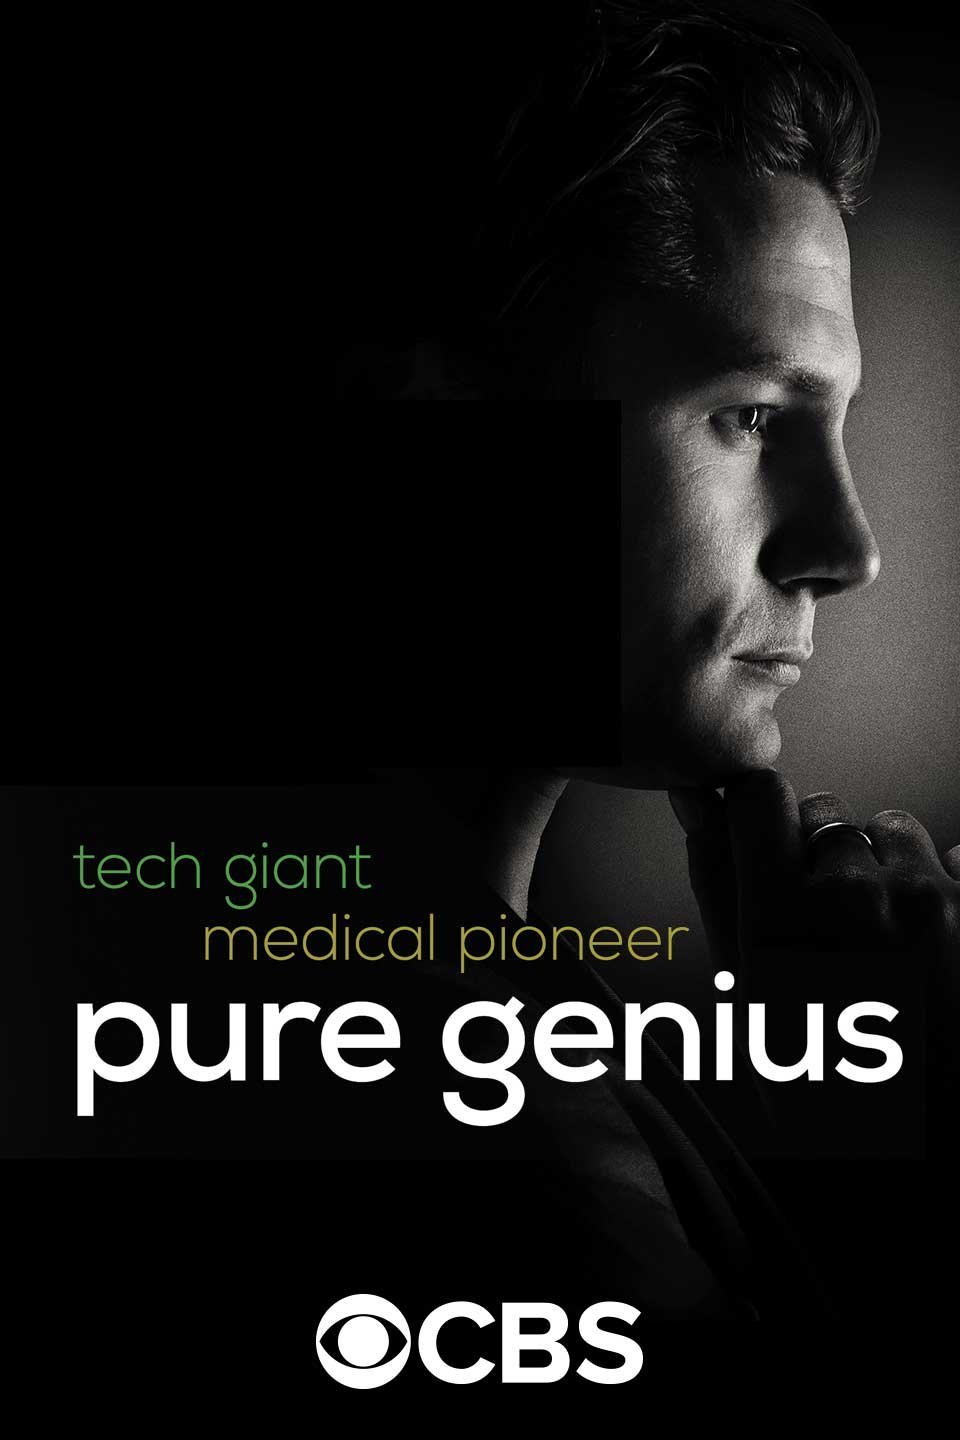 Poster of the movie Pure Genius